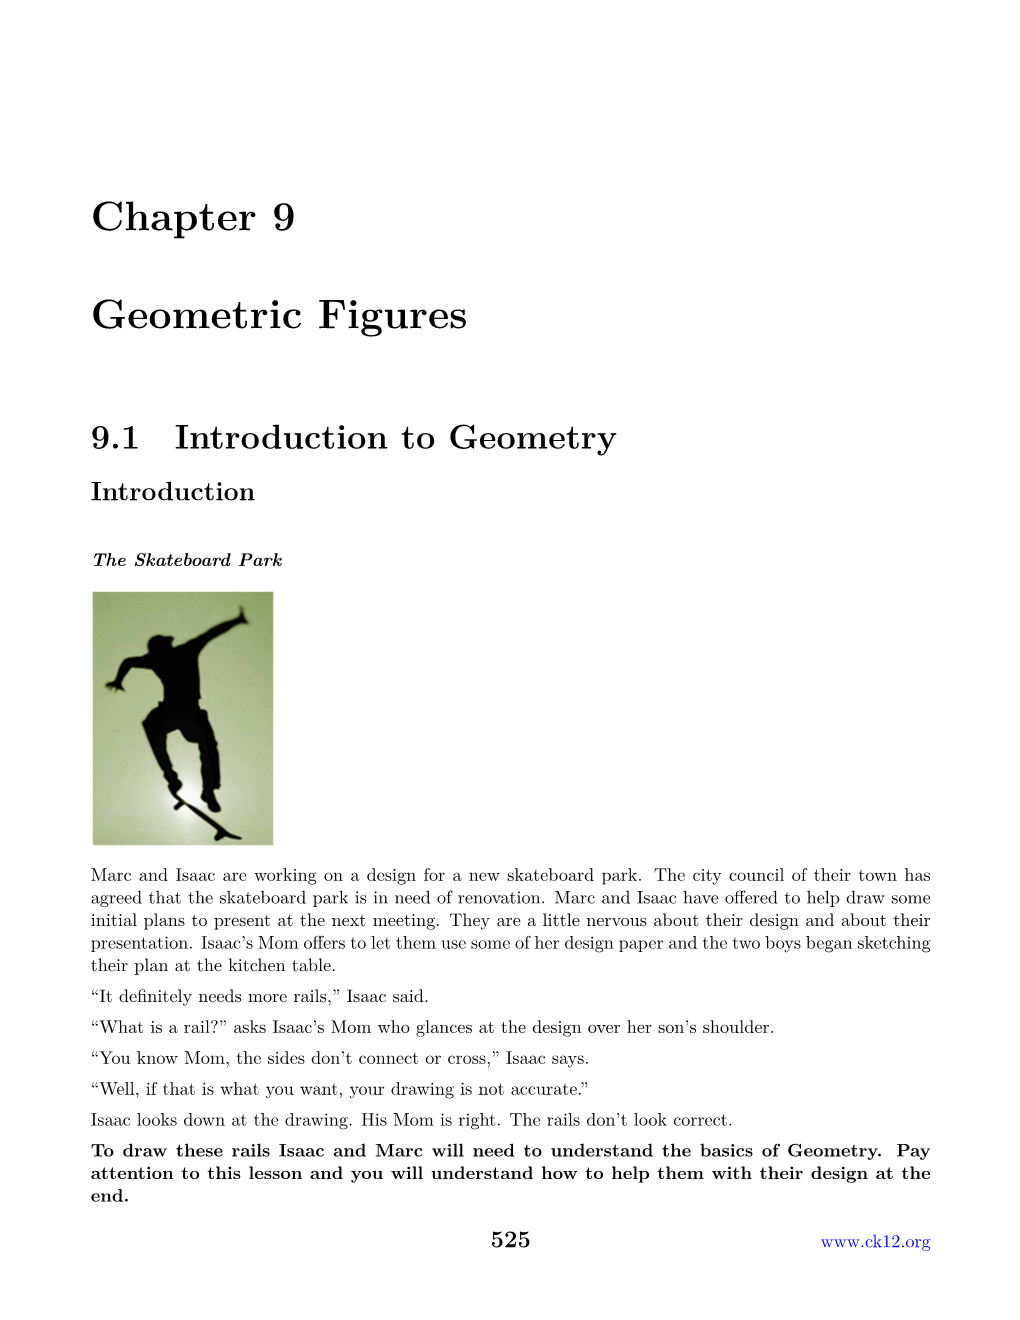 Chapter 9 Geometric Figures